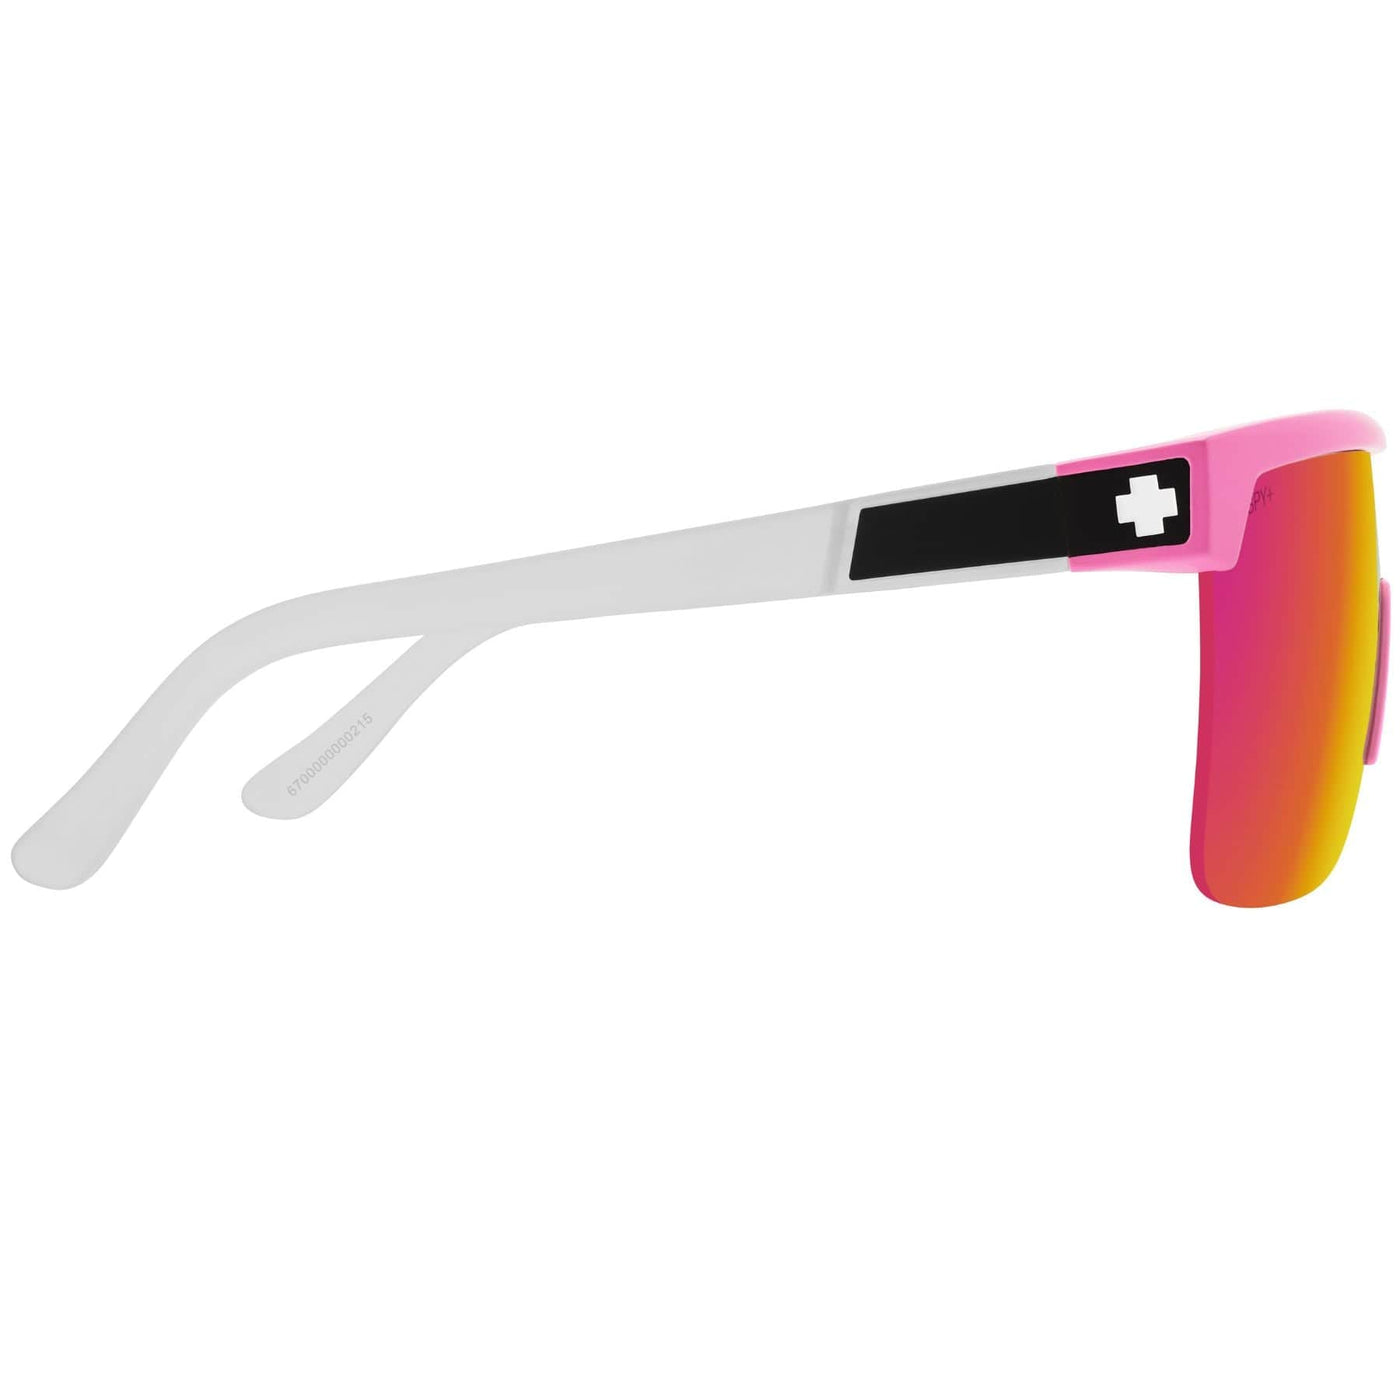 SPY FLYNN 5050 Sunglasses, Happy Lens - Pink